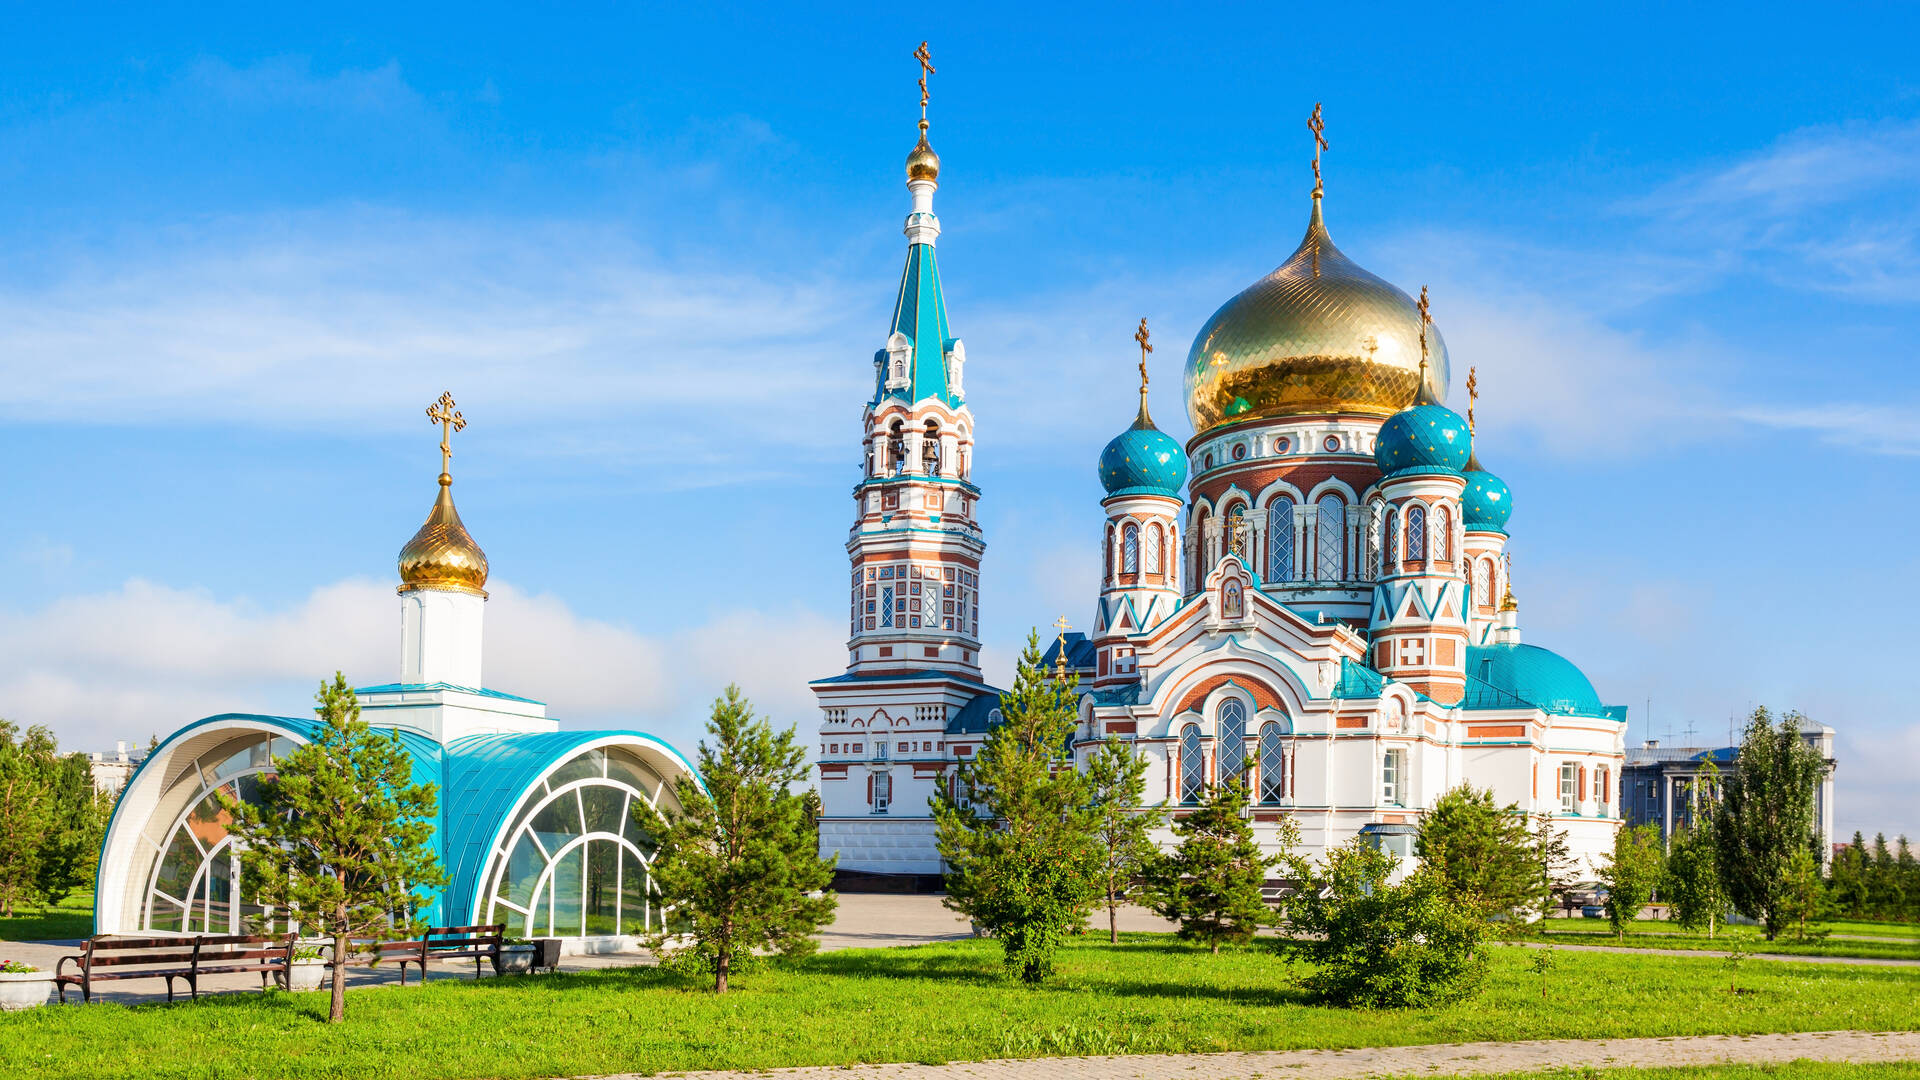 Omsk Reisen und Billigflug - Russland - Hotels und Flug nach Omsk